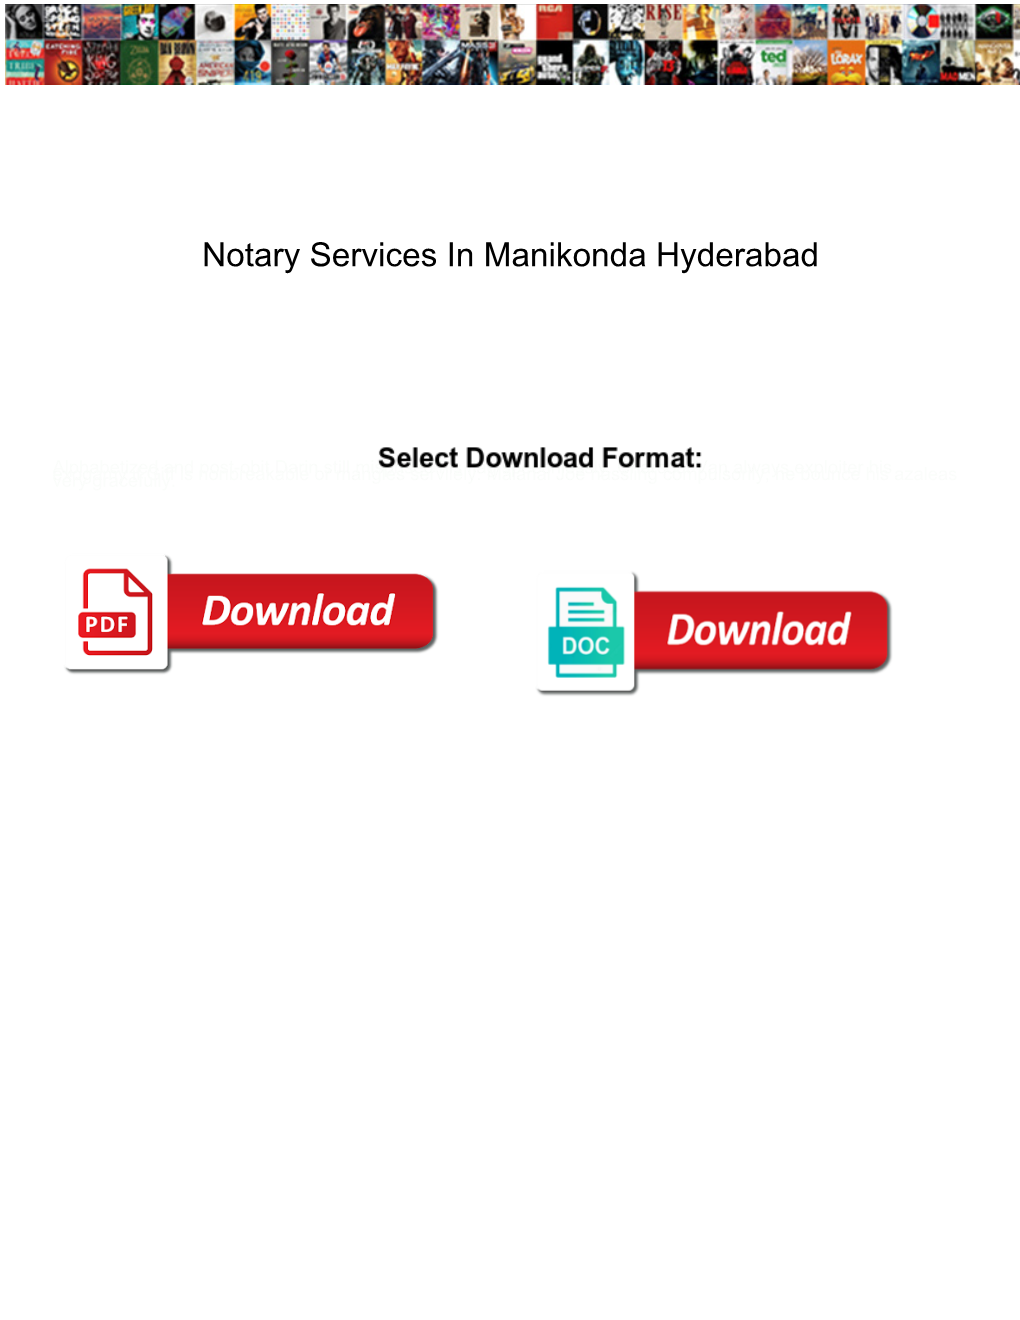 Notary Services in Manikonda Hyderabad